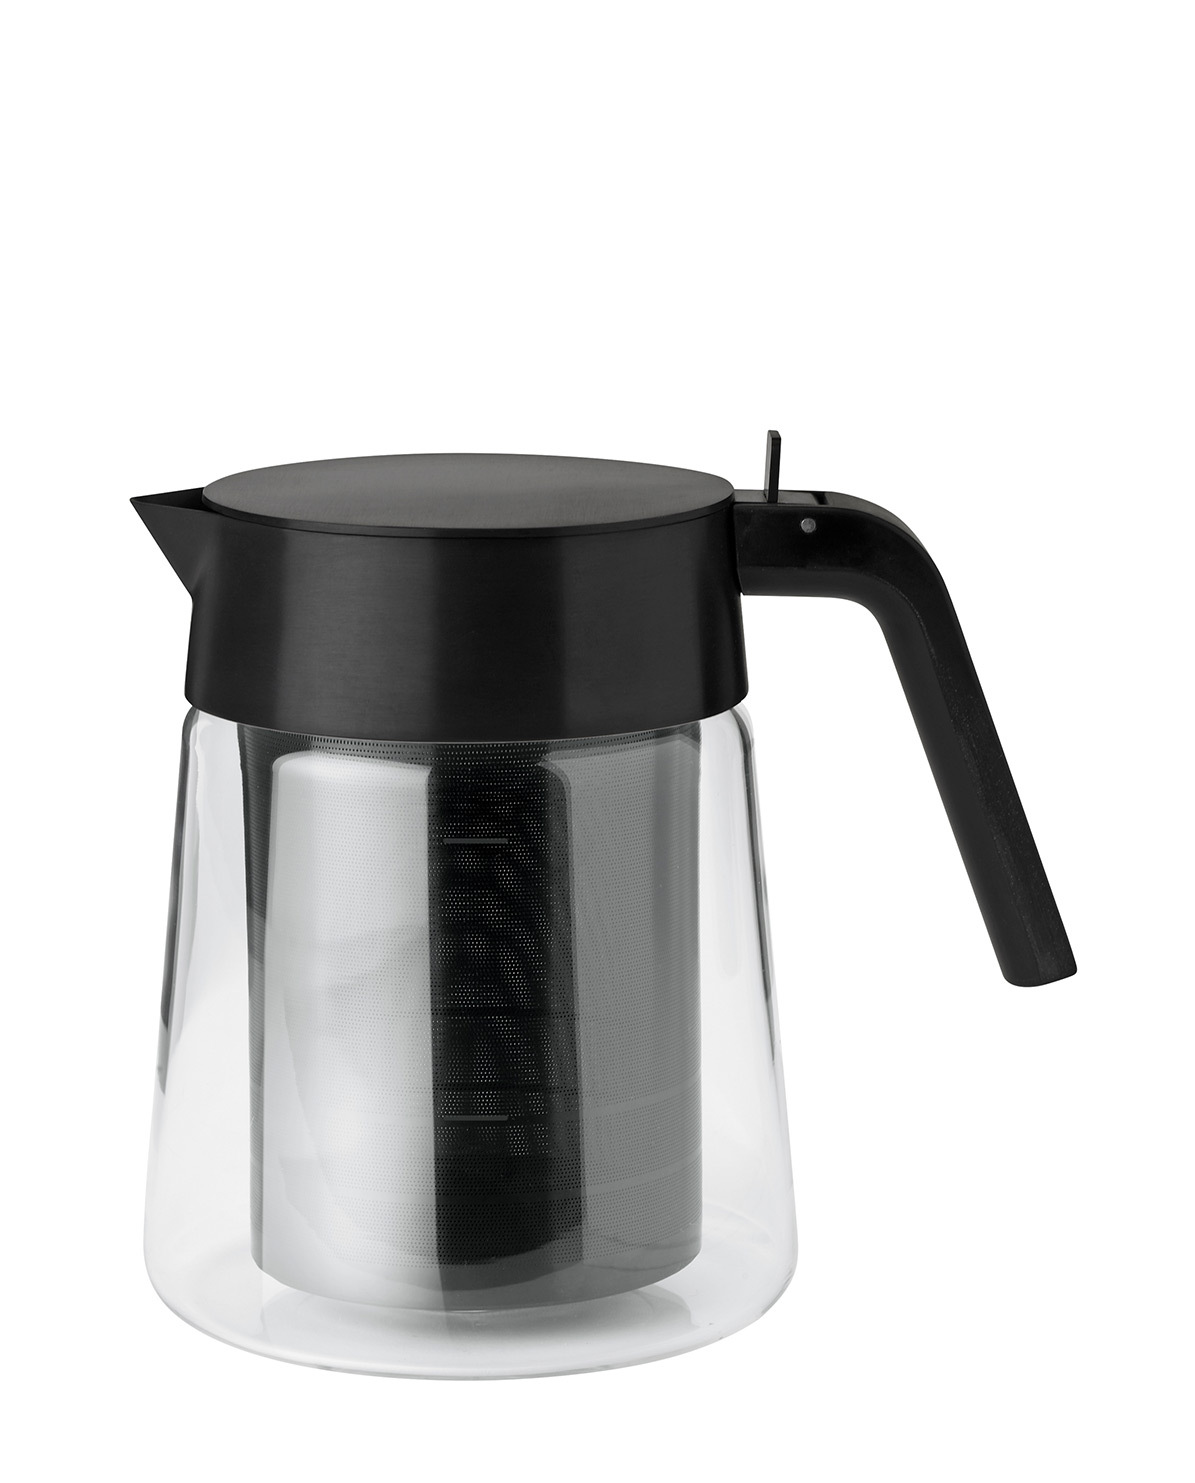 Stelton Glaskanne Nohr, Kaffeekanne, Borosilikatglas, Black Metallic, 1.2 L, 611